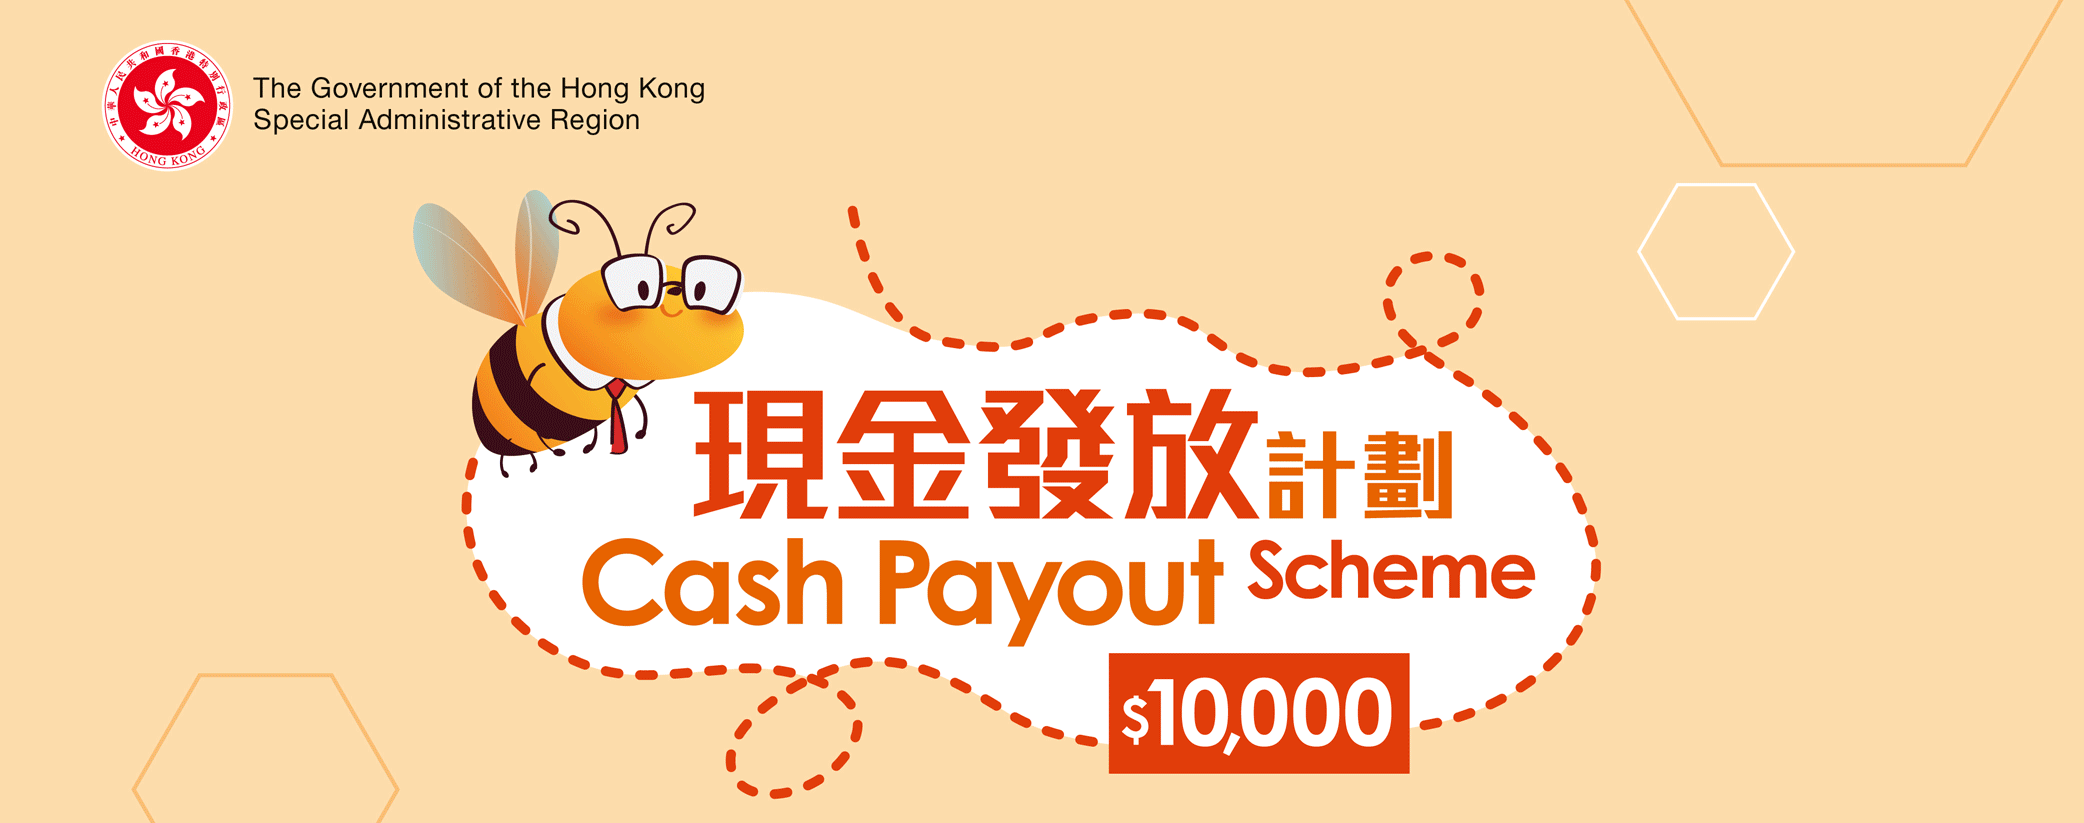 Cash Payout Scheme